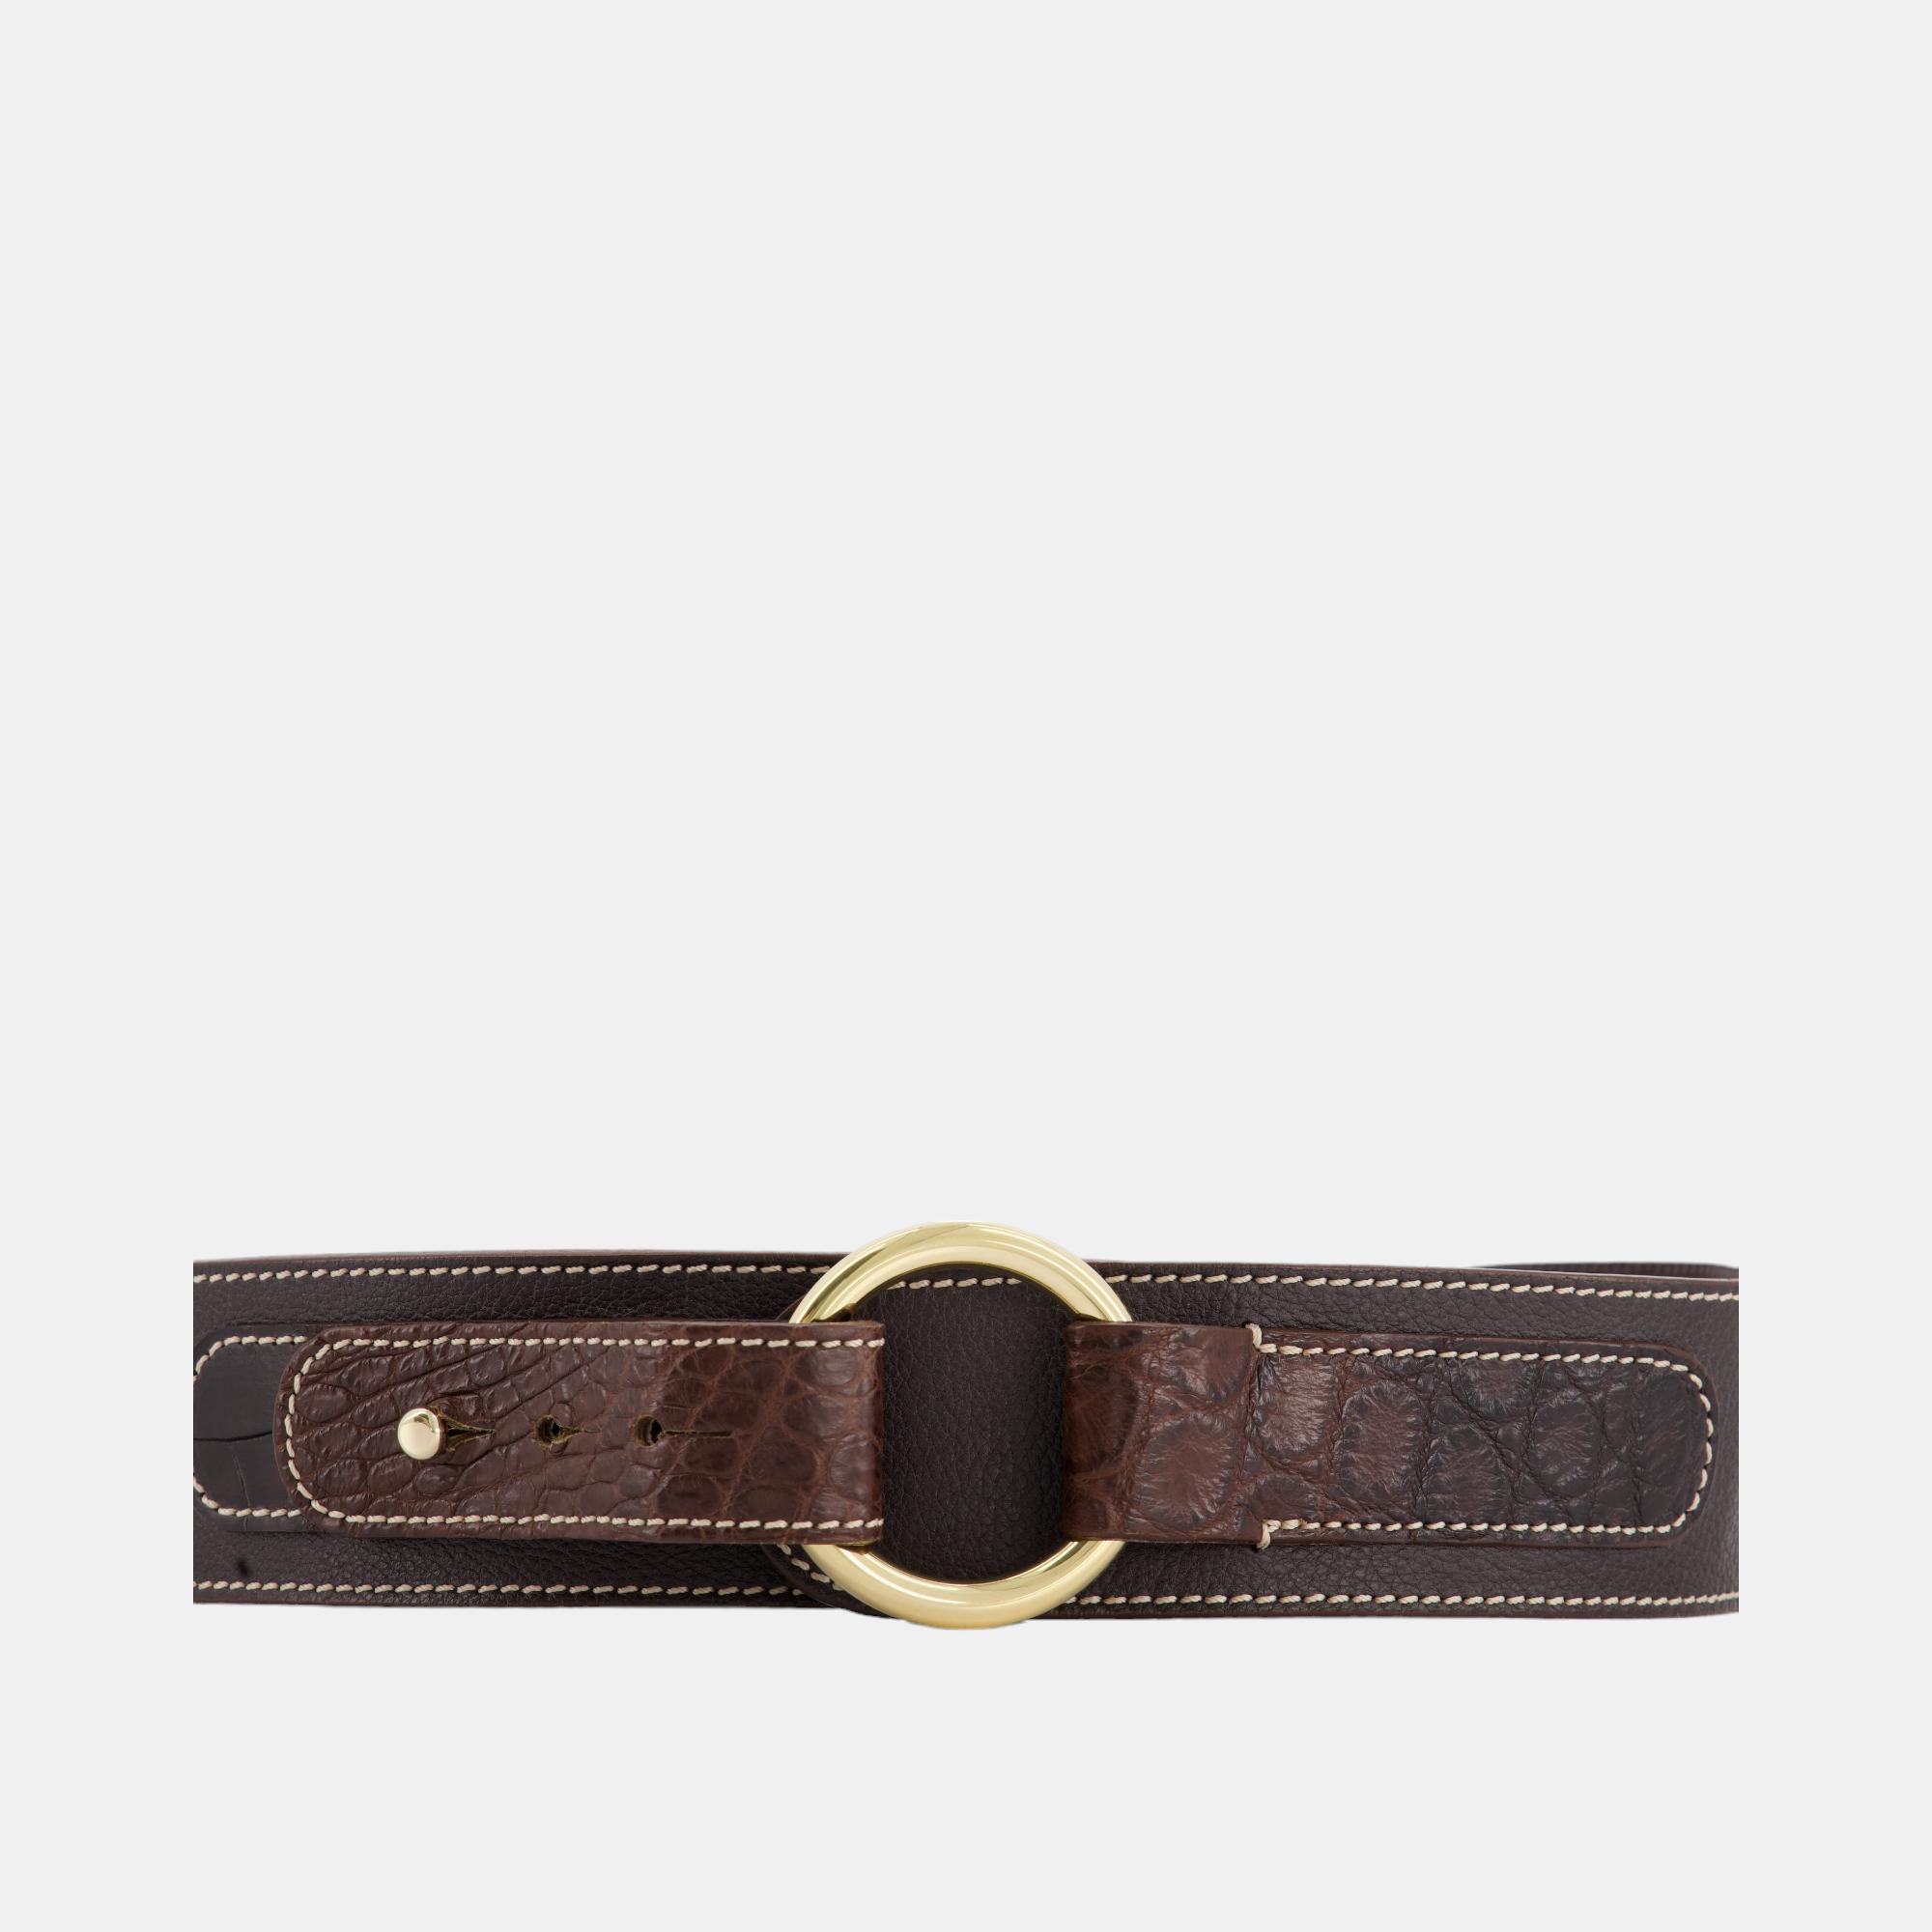 Loro piana dark brown leather and crocodile belt size 85cm